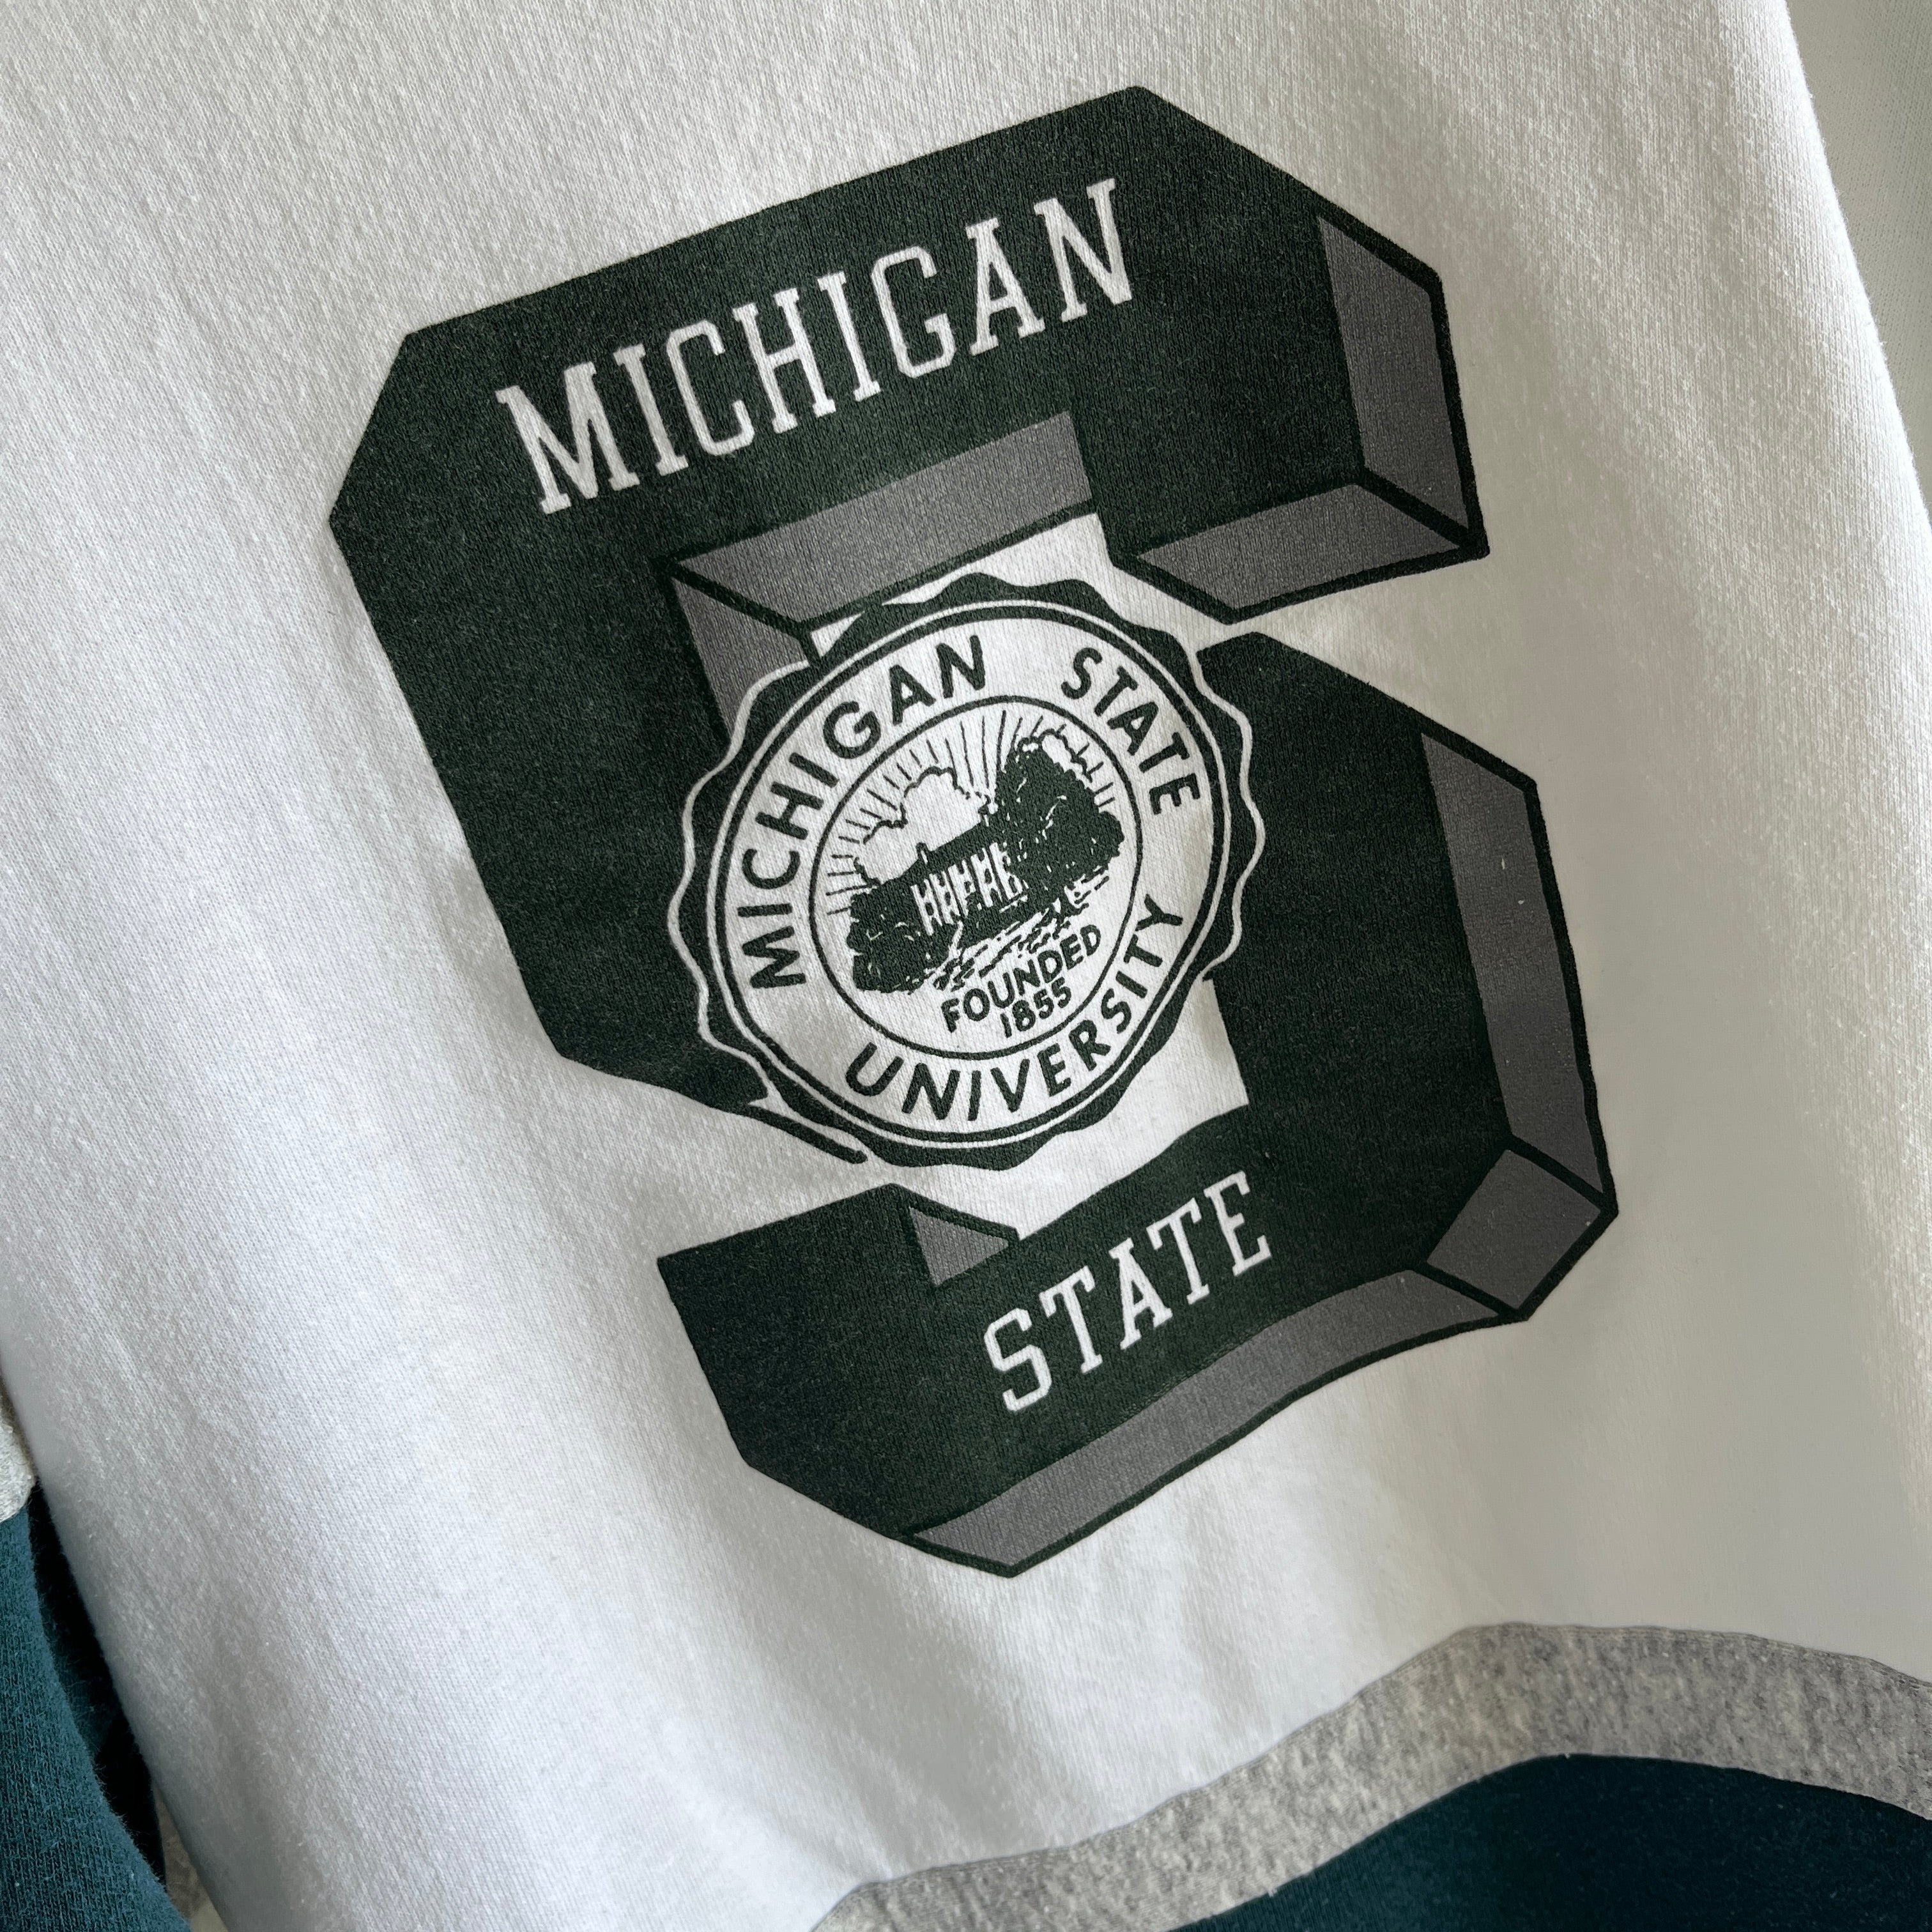 1980s Two Tone Michigan State Spartans Sweatshirt